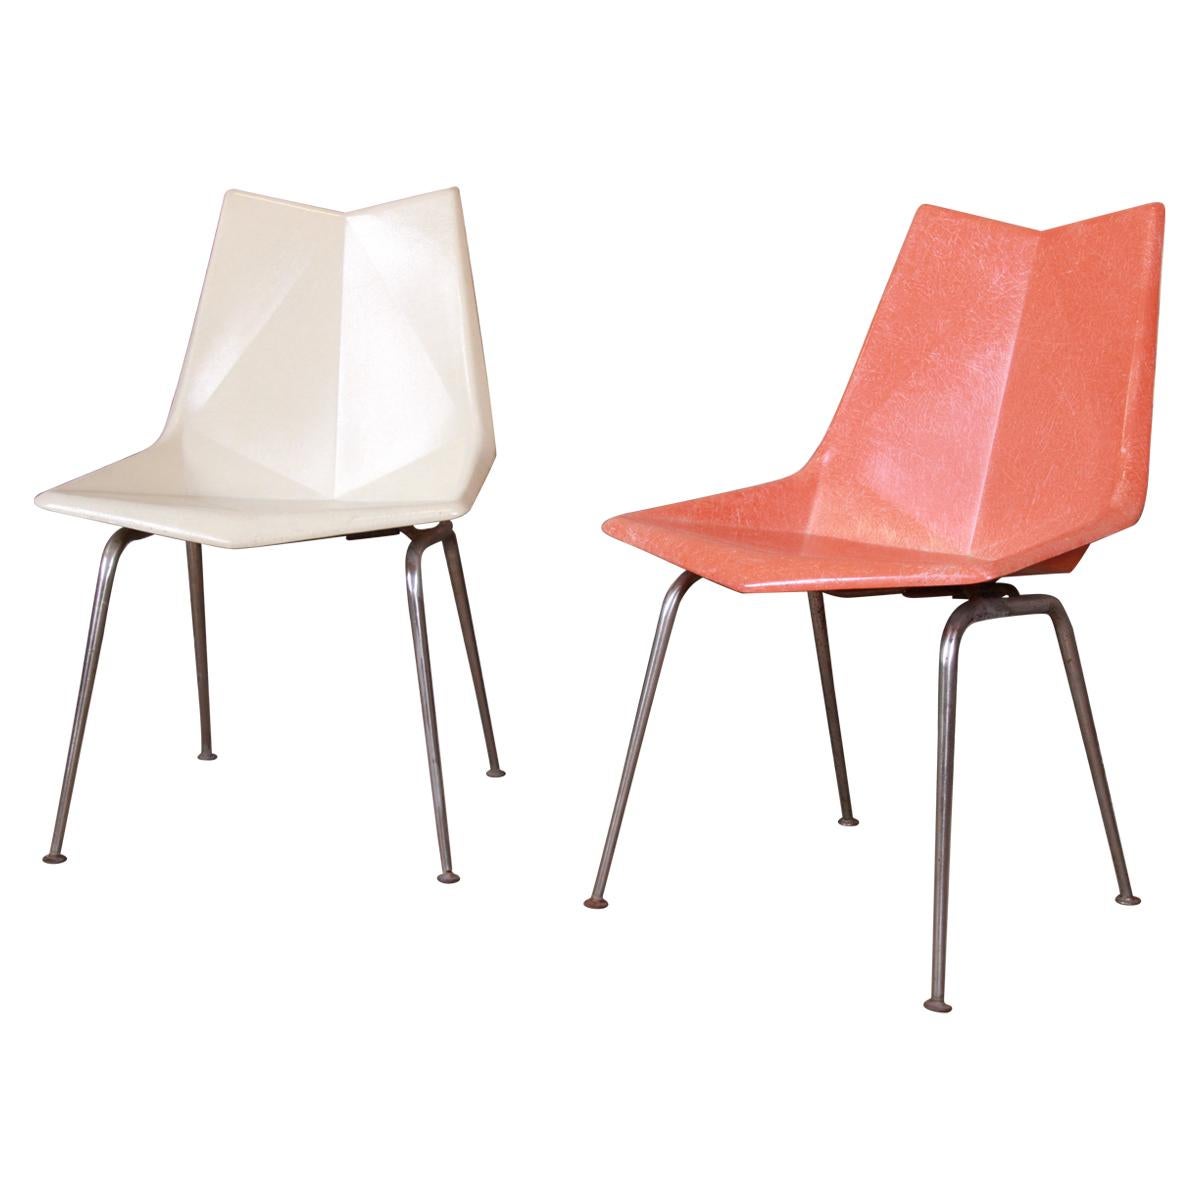 Paul McCobb Fiberglass Origami Chairs, Pair